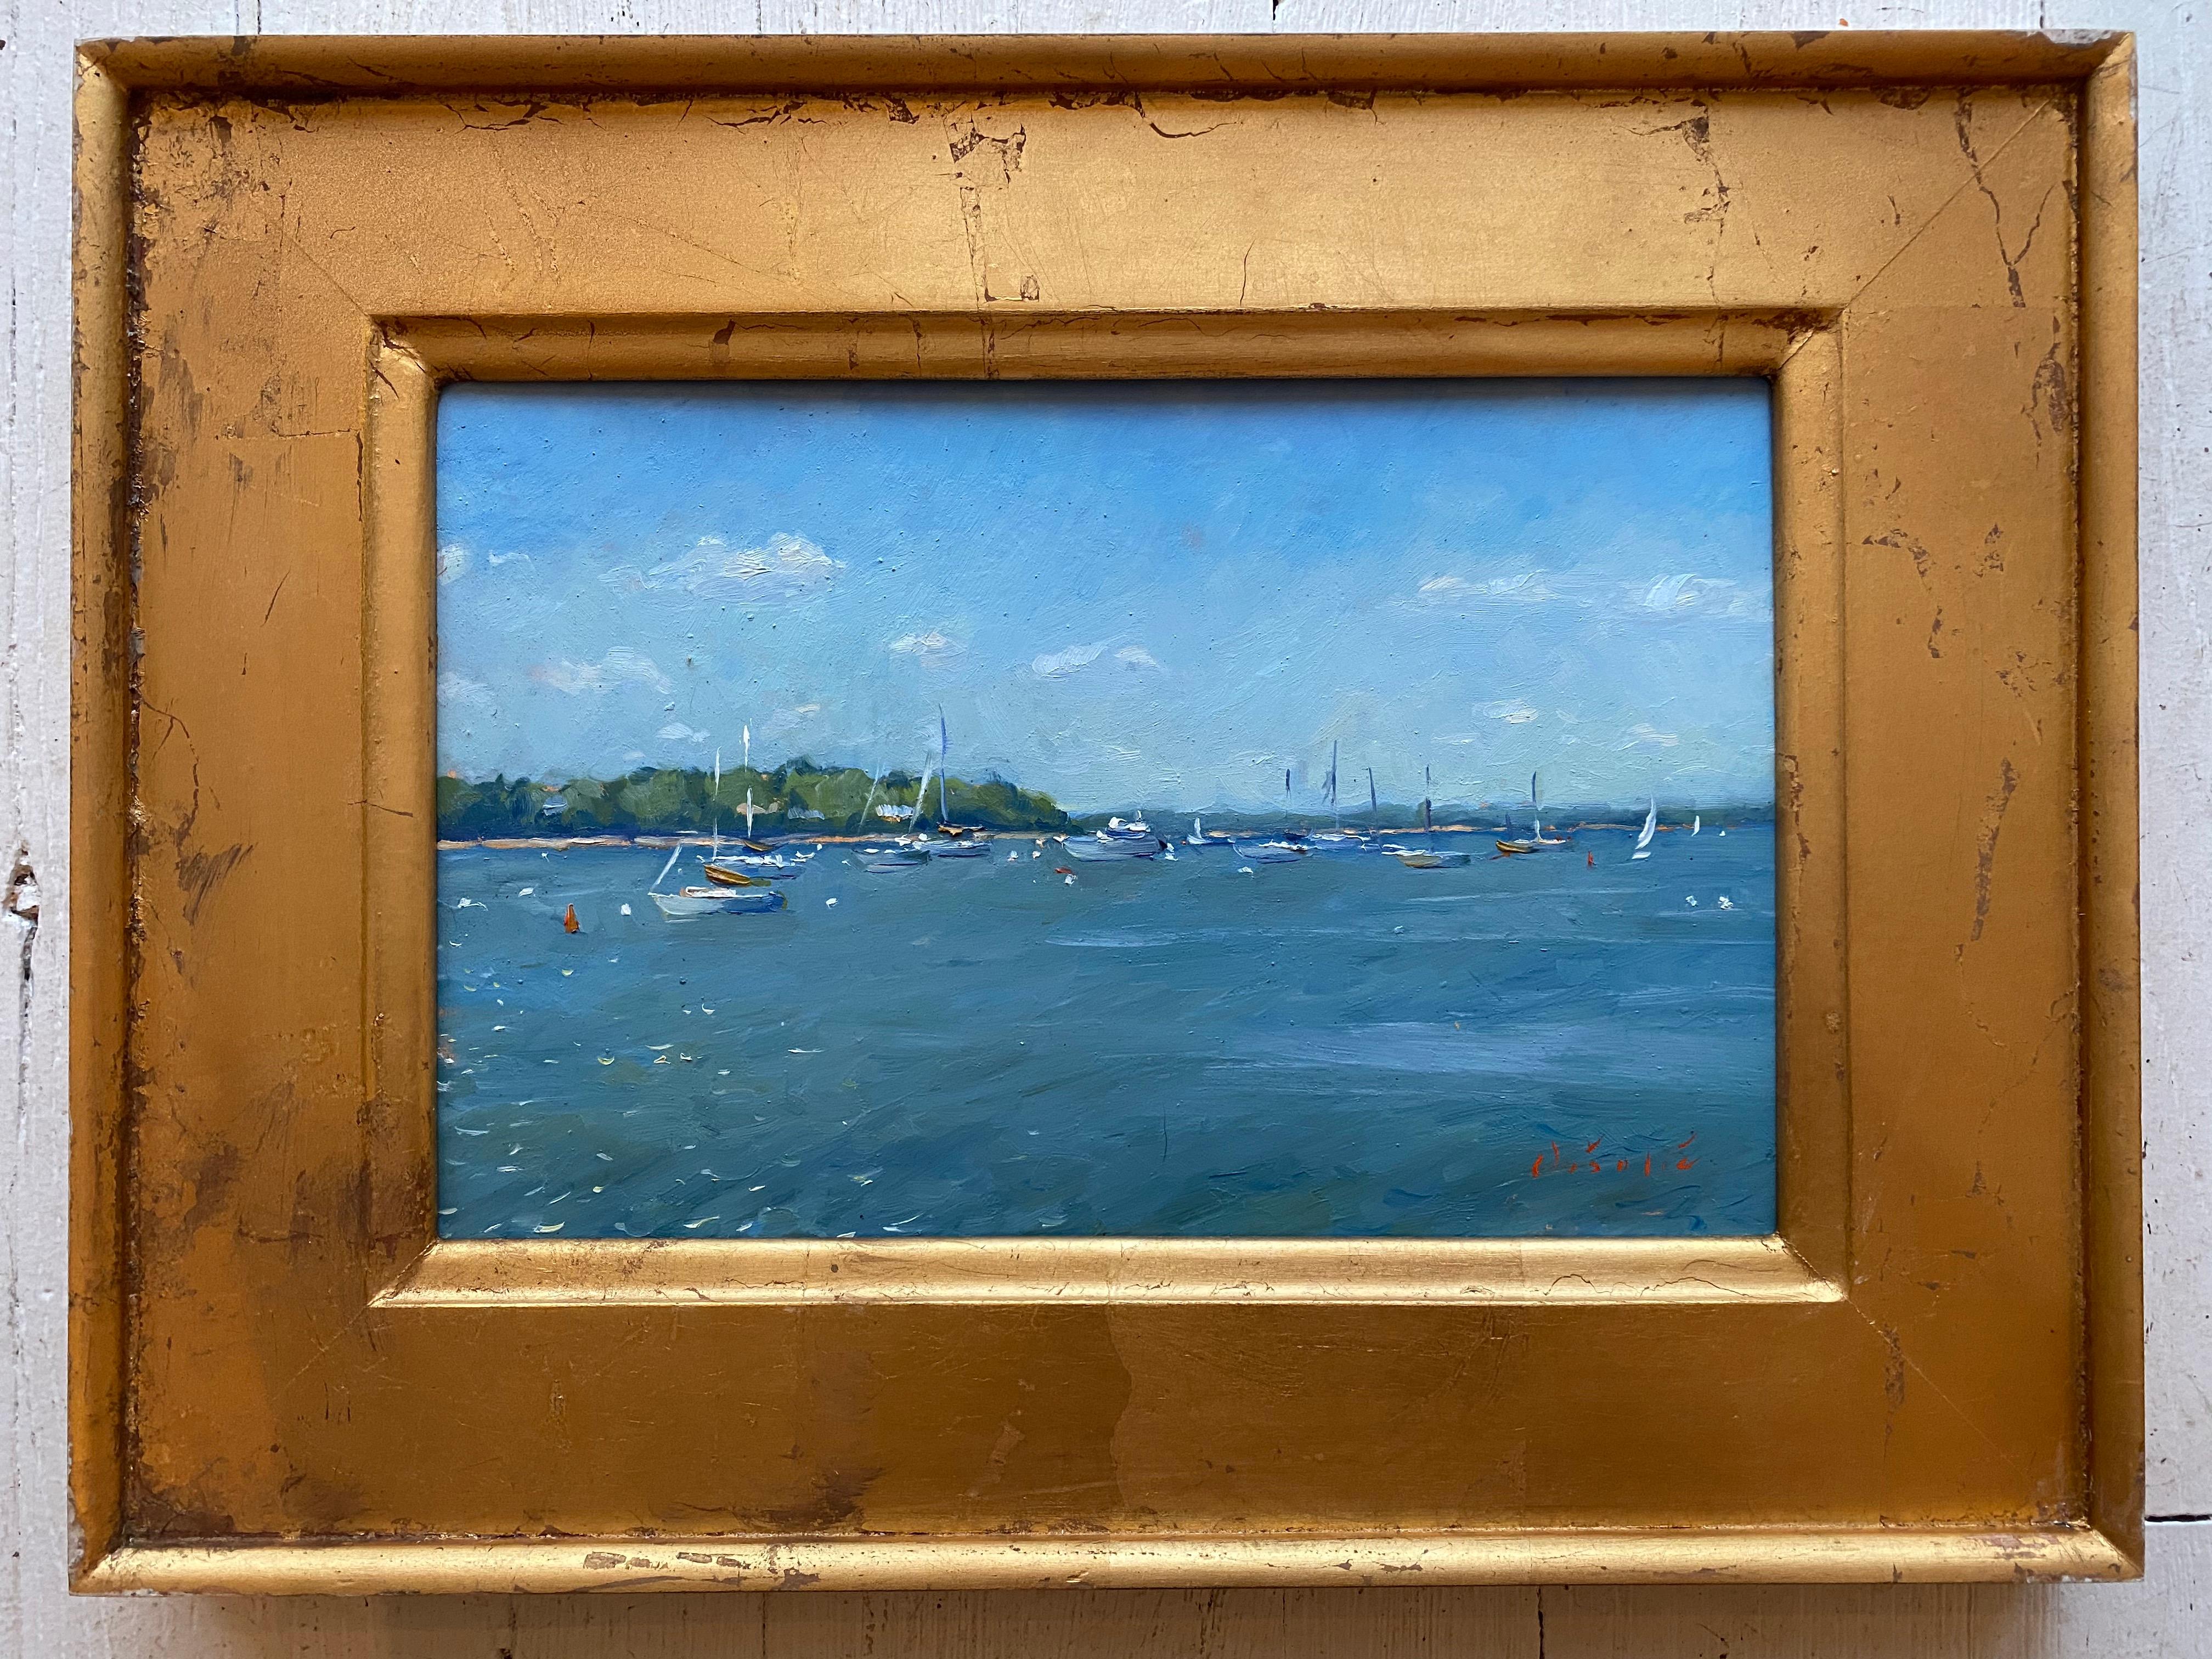 Sag Harbor Bay - Painting by Tina Orsolic Dalessio